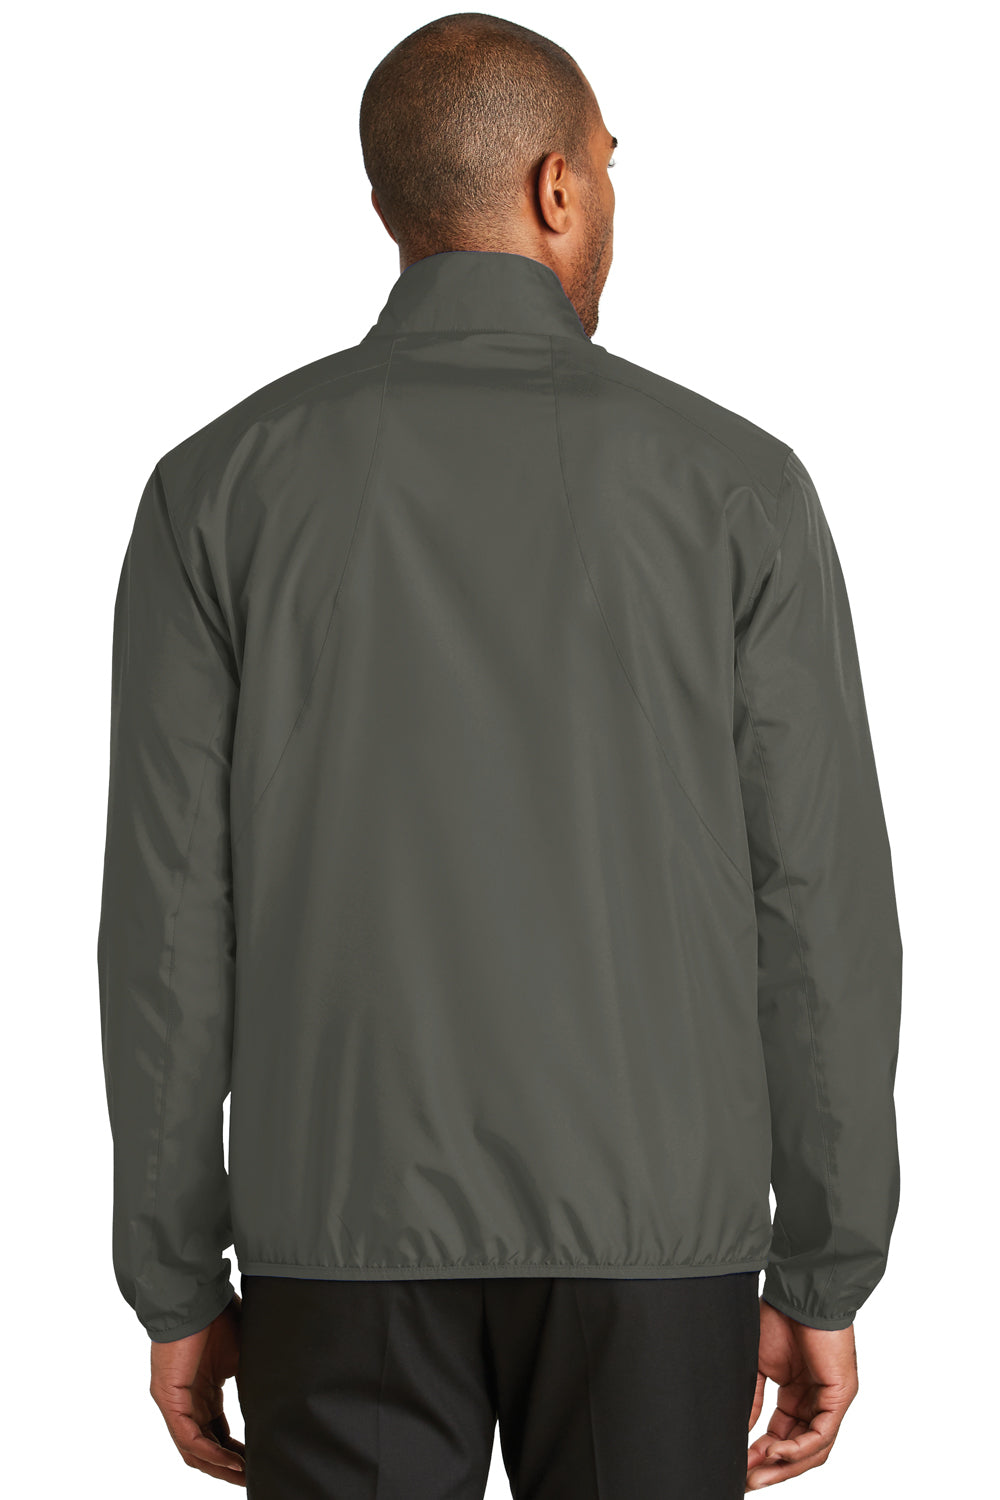 Port Authority J344 Mens Zephyr Wind & Water Resistant Full Zip Jacket Grey Steel Back